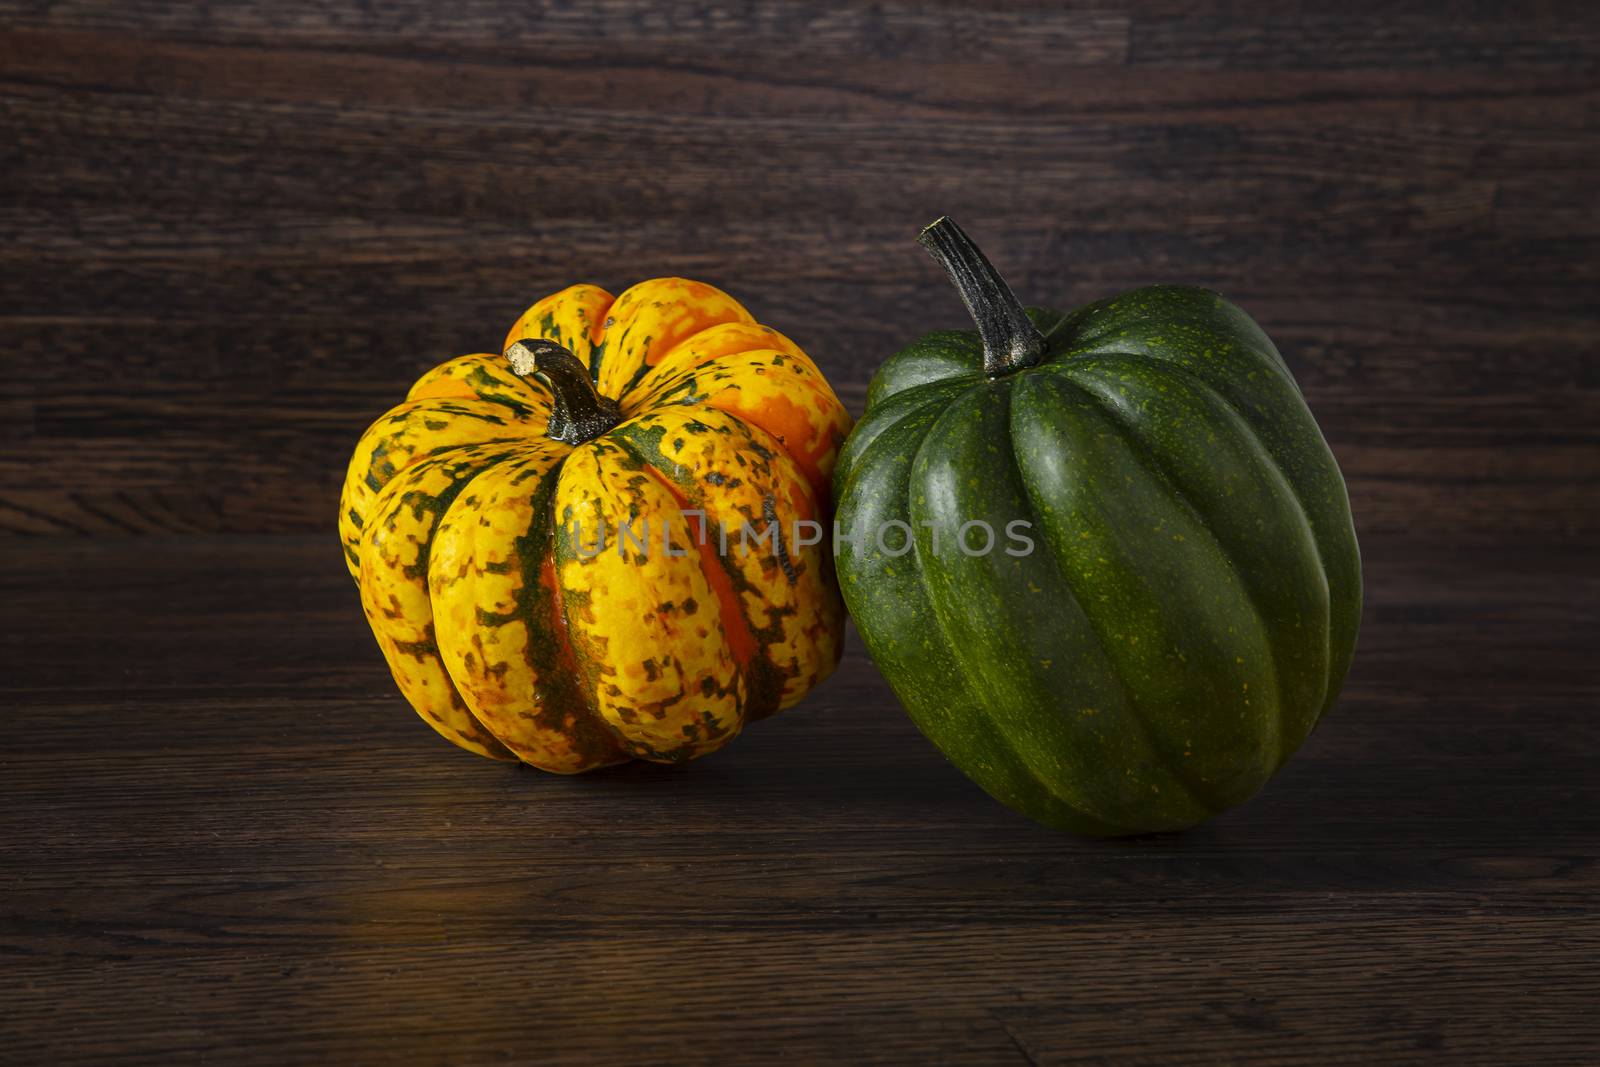 orange and green sweet dumpling squash against a dark wood background